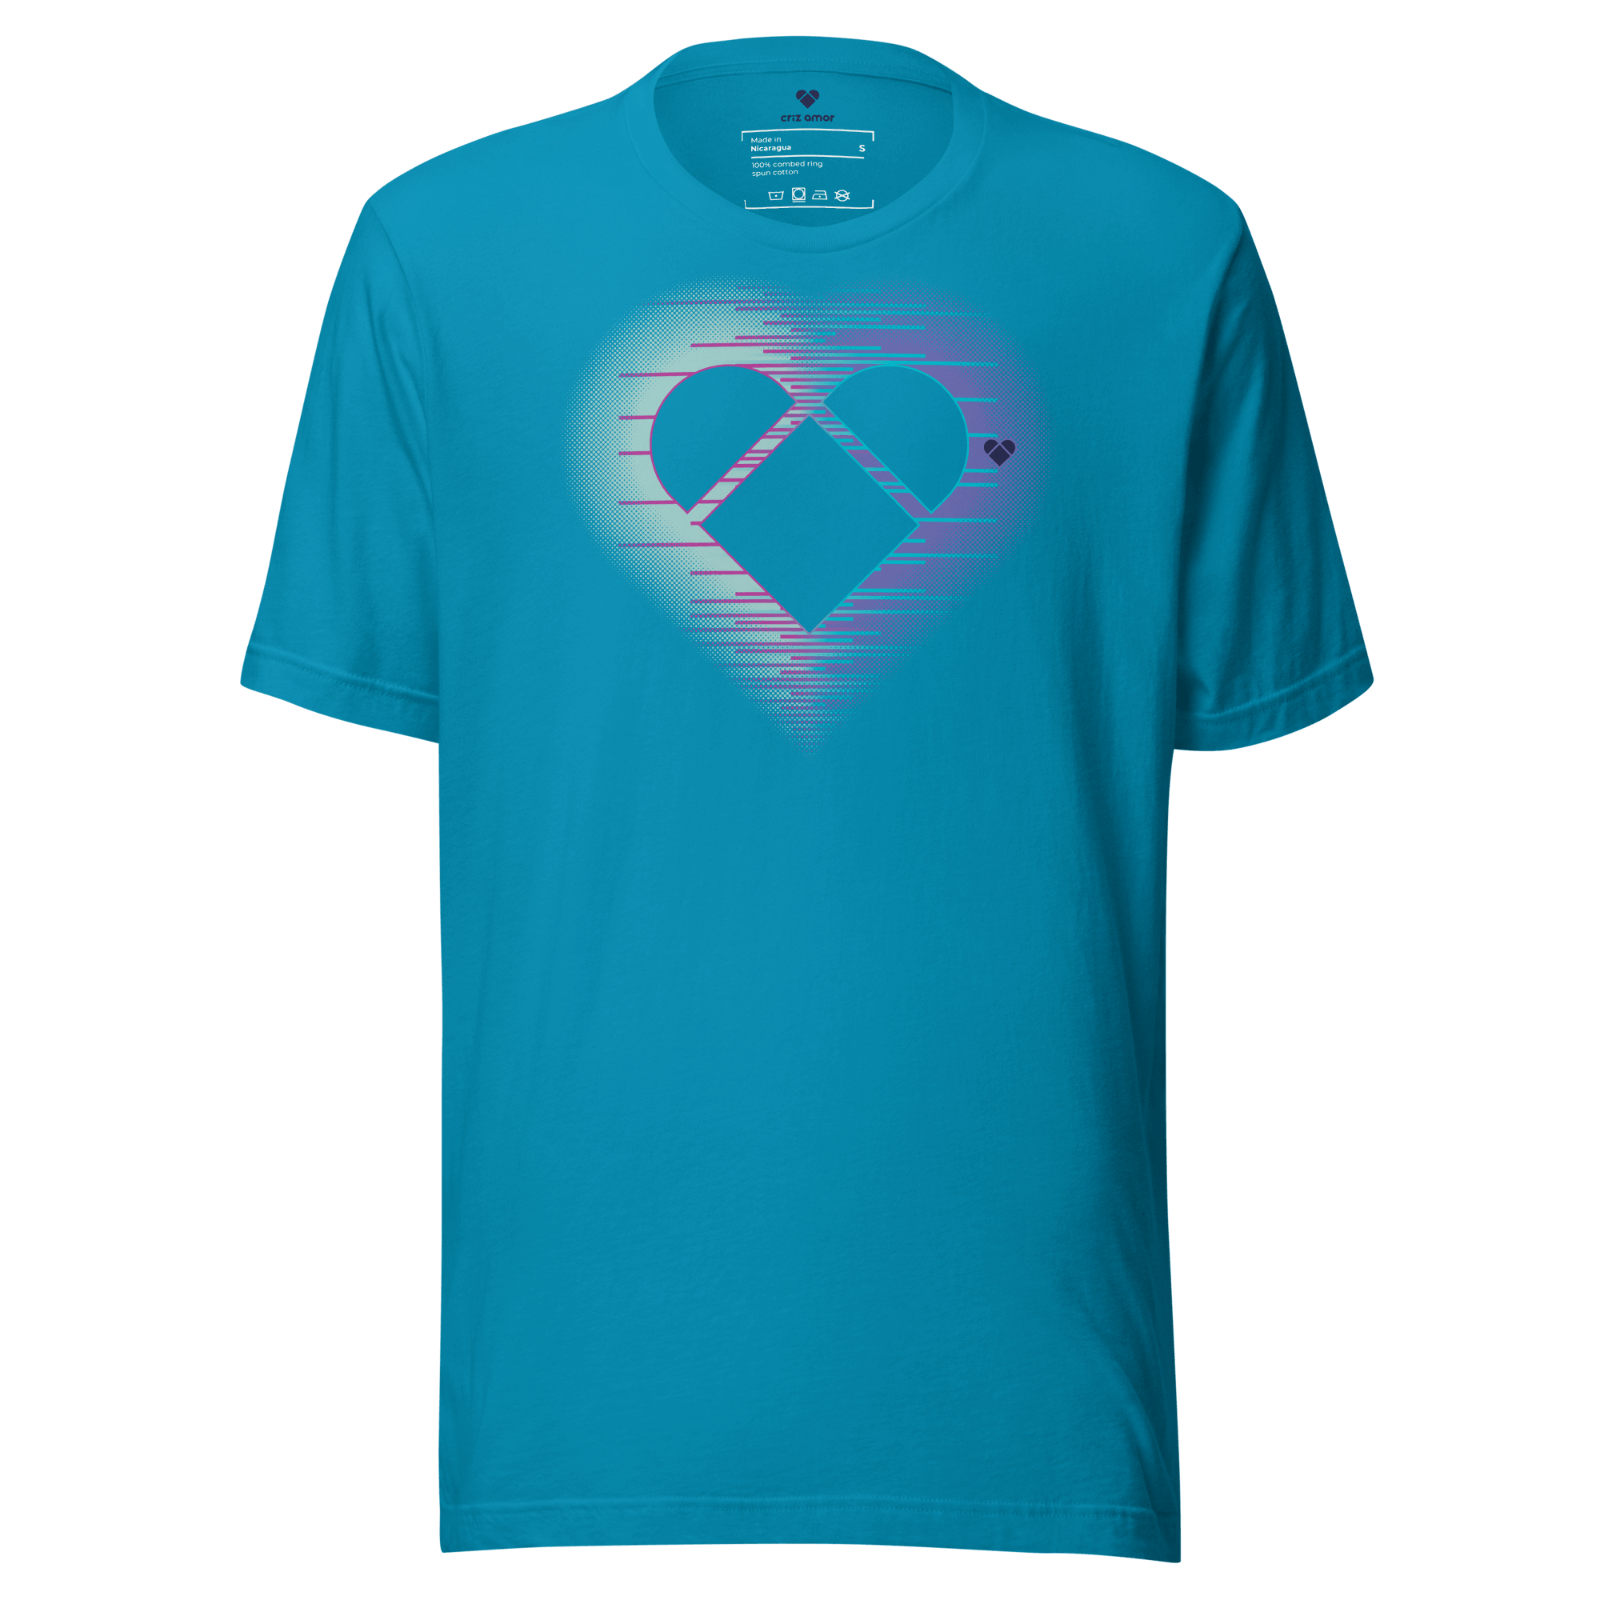 Aqua Tee Dual Heart Aura - Mint and Periwinkle - Front Heart Logo